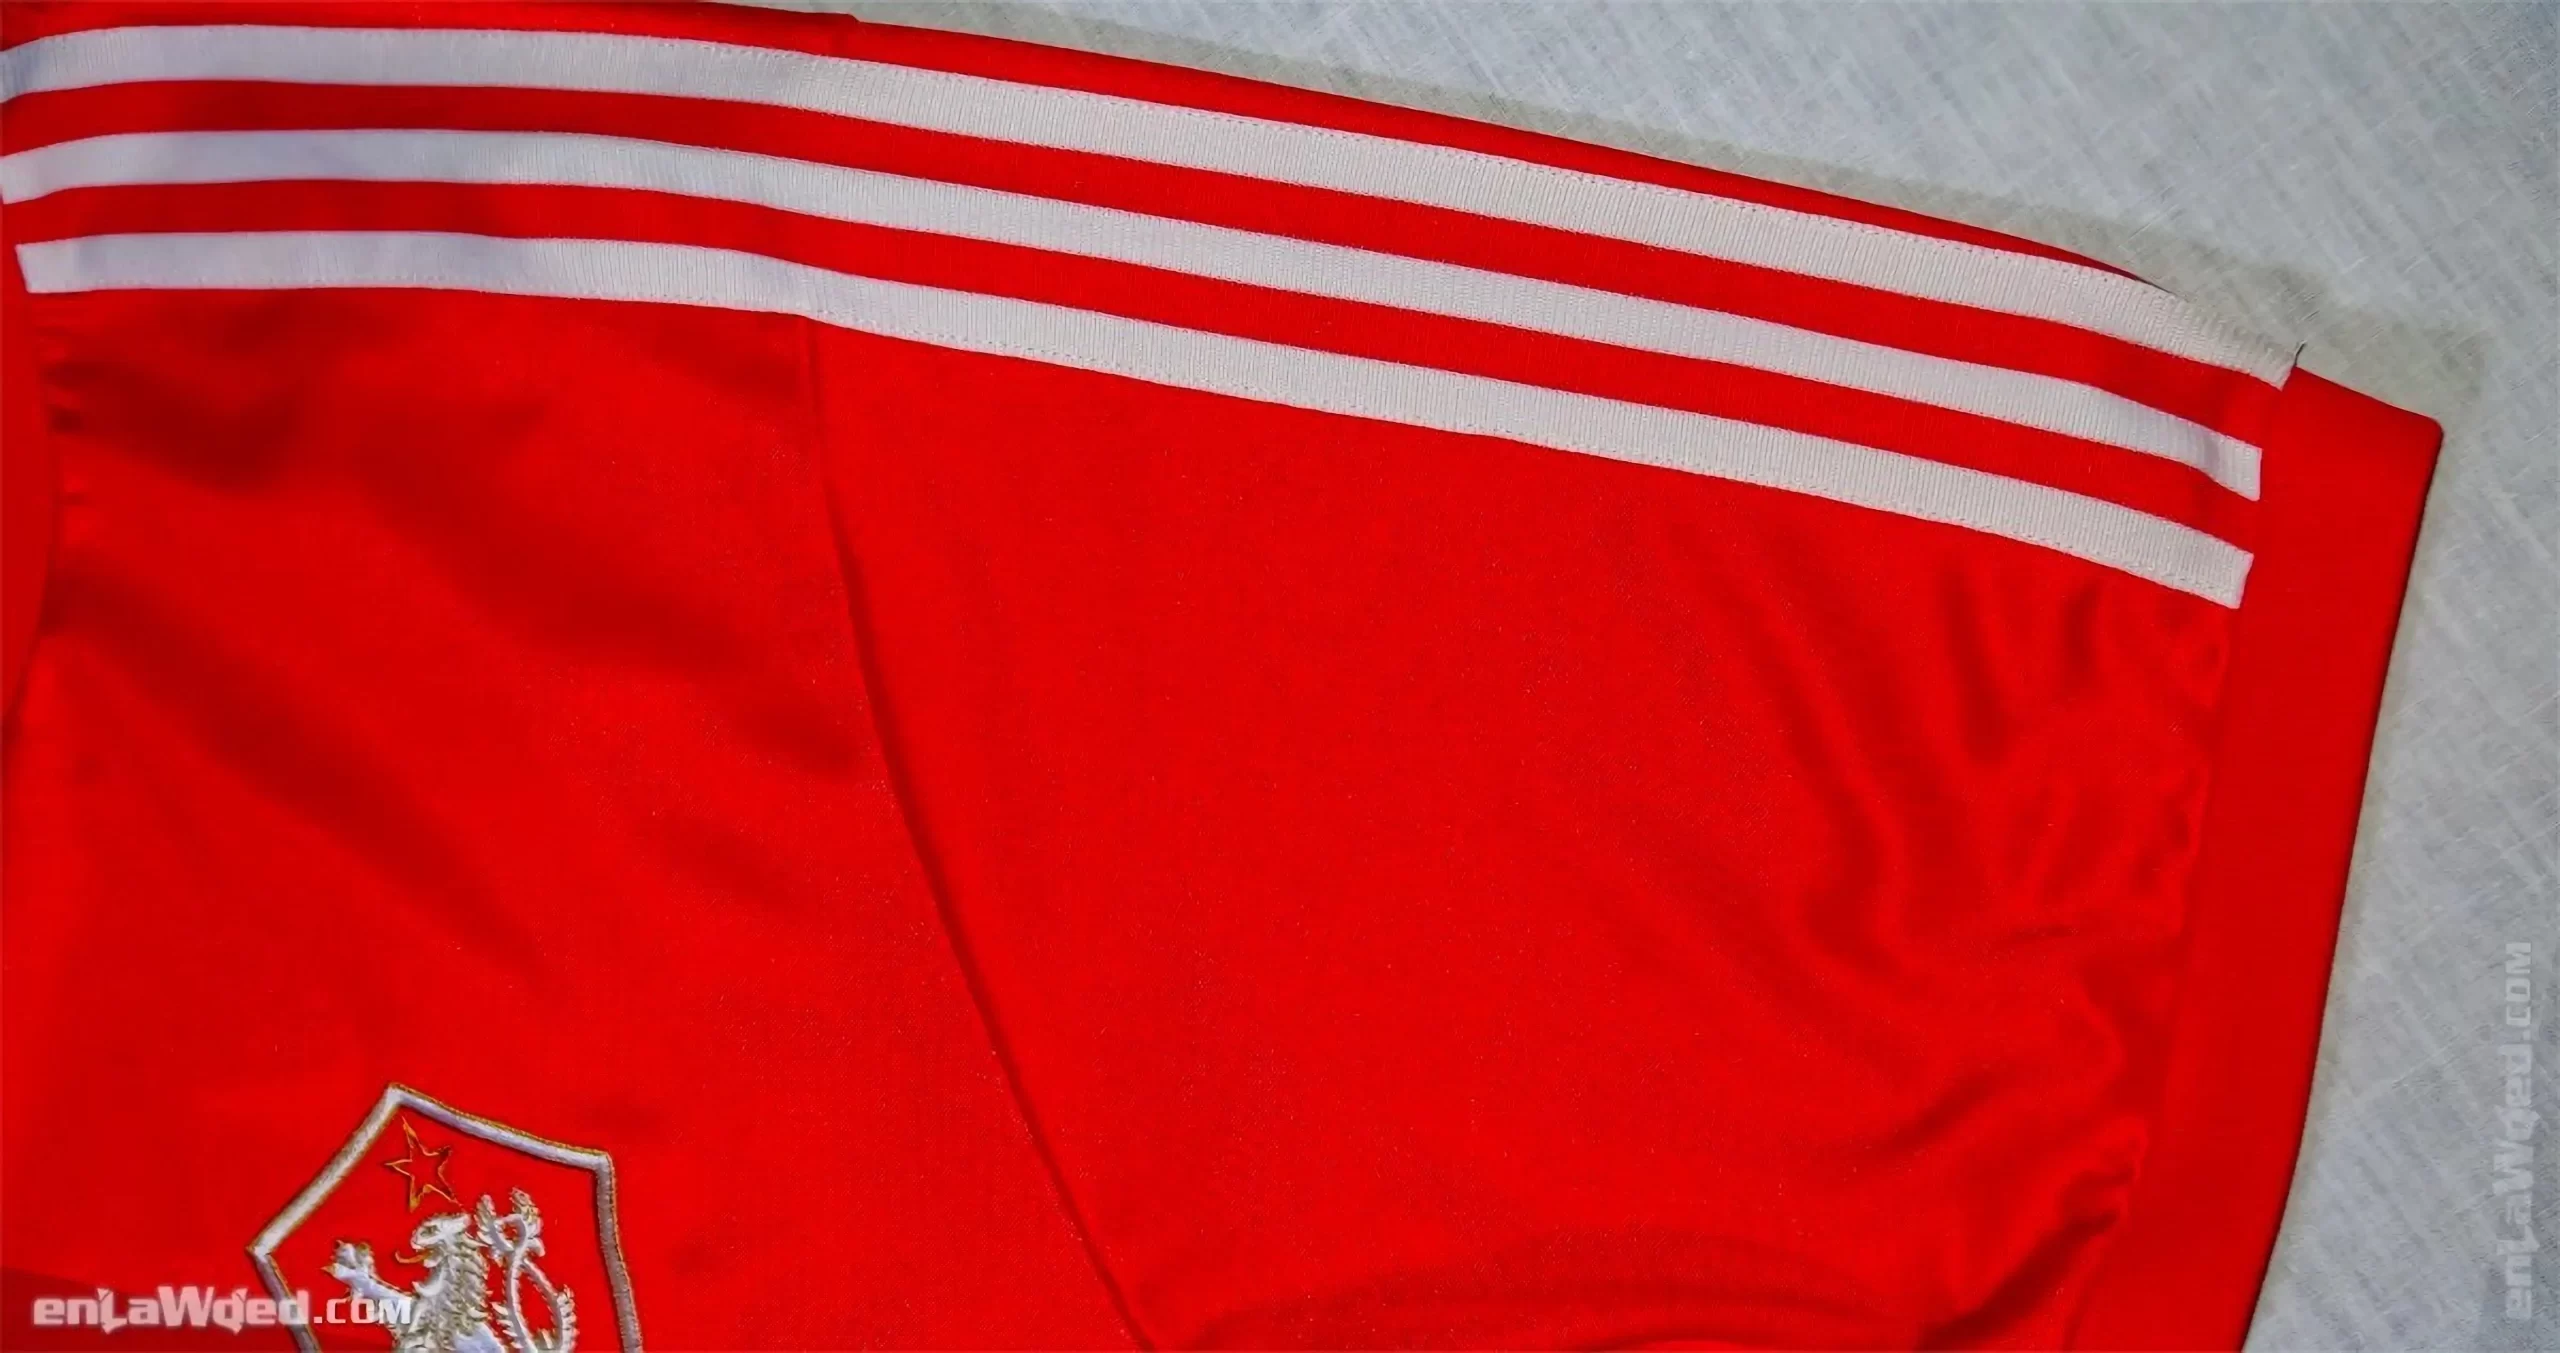 Men’s 2006 Panenka ’76 Czechoslovakia Jersey by Adidas: Reliable (EnLawded.com file #lmcf9ugvssr1gd5lcbj)